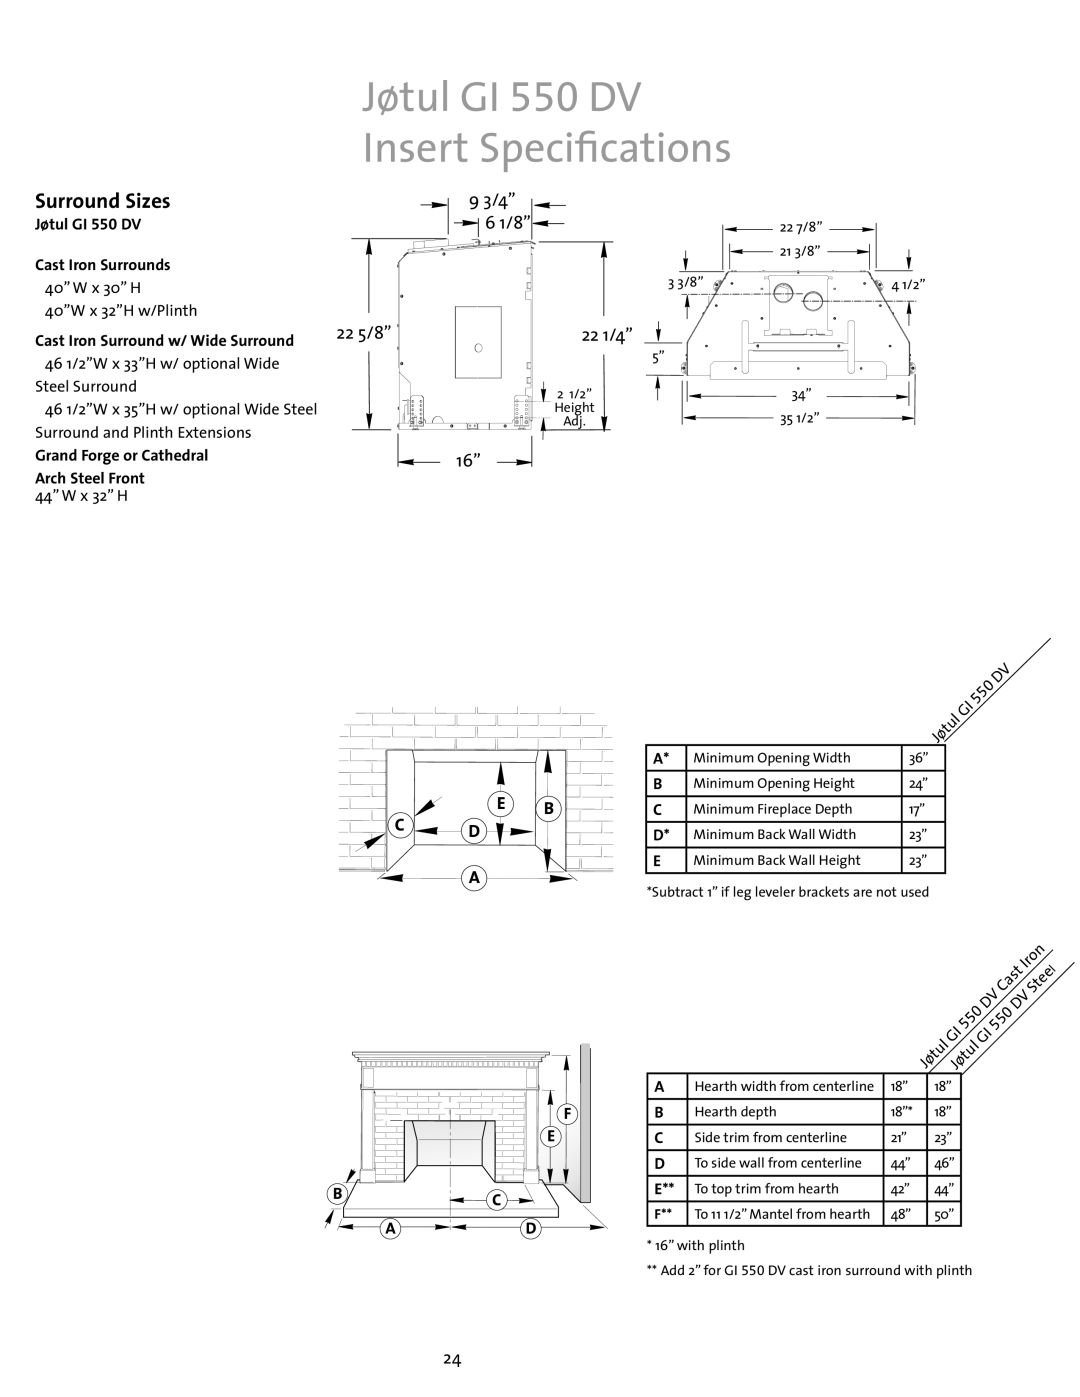 Jotul Gas Inserts and Fireplaces brochure Jøtul GI 550 DV Insert Specifications, Surround Sizes, E B C D, 44” W x 32” H 